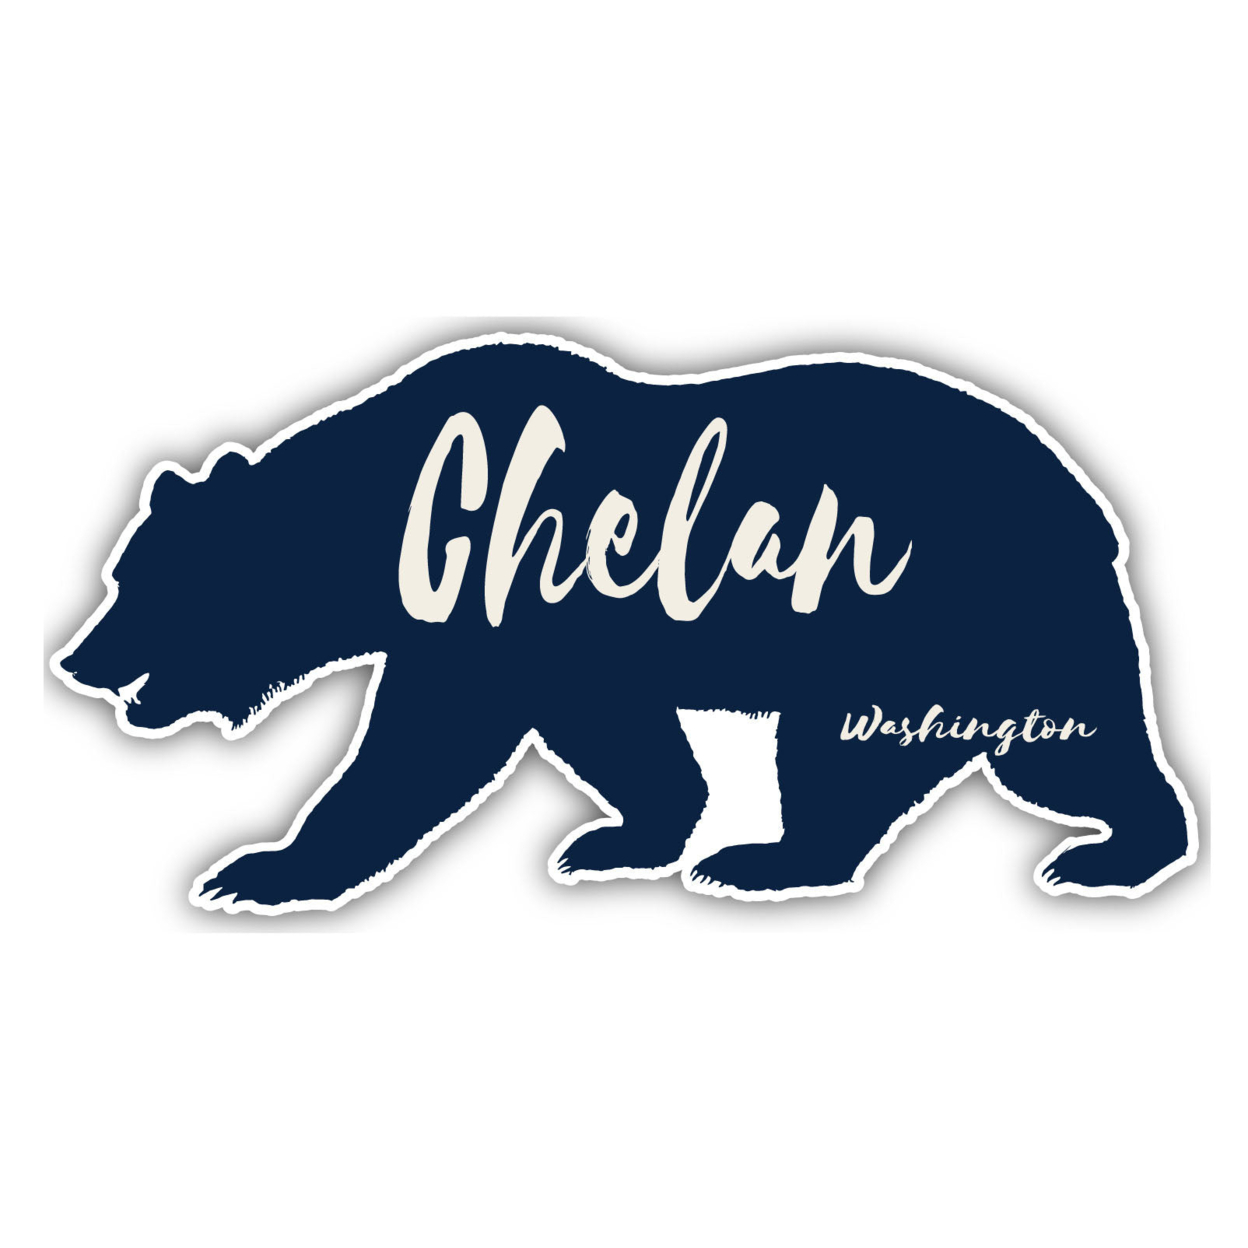 Chelan Washington Souvenir Decorative Stickers (Choose Theme And Size) - Single Unit, 4-Inch, Tent